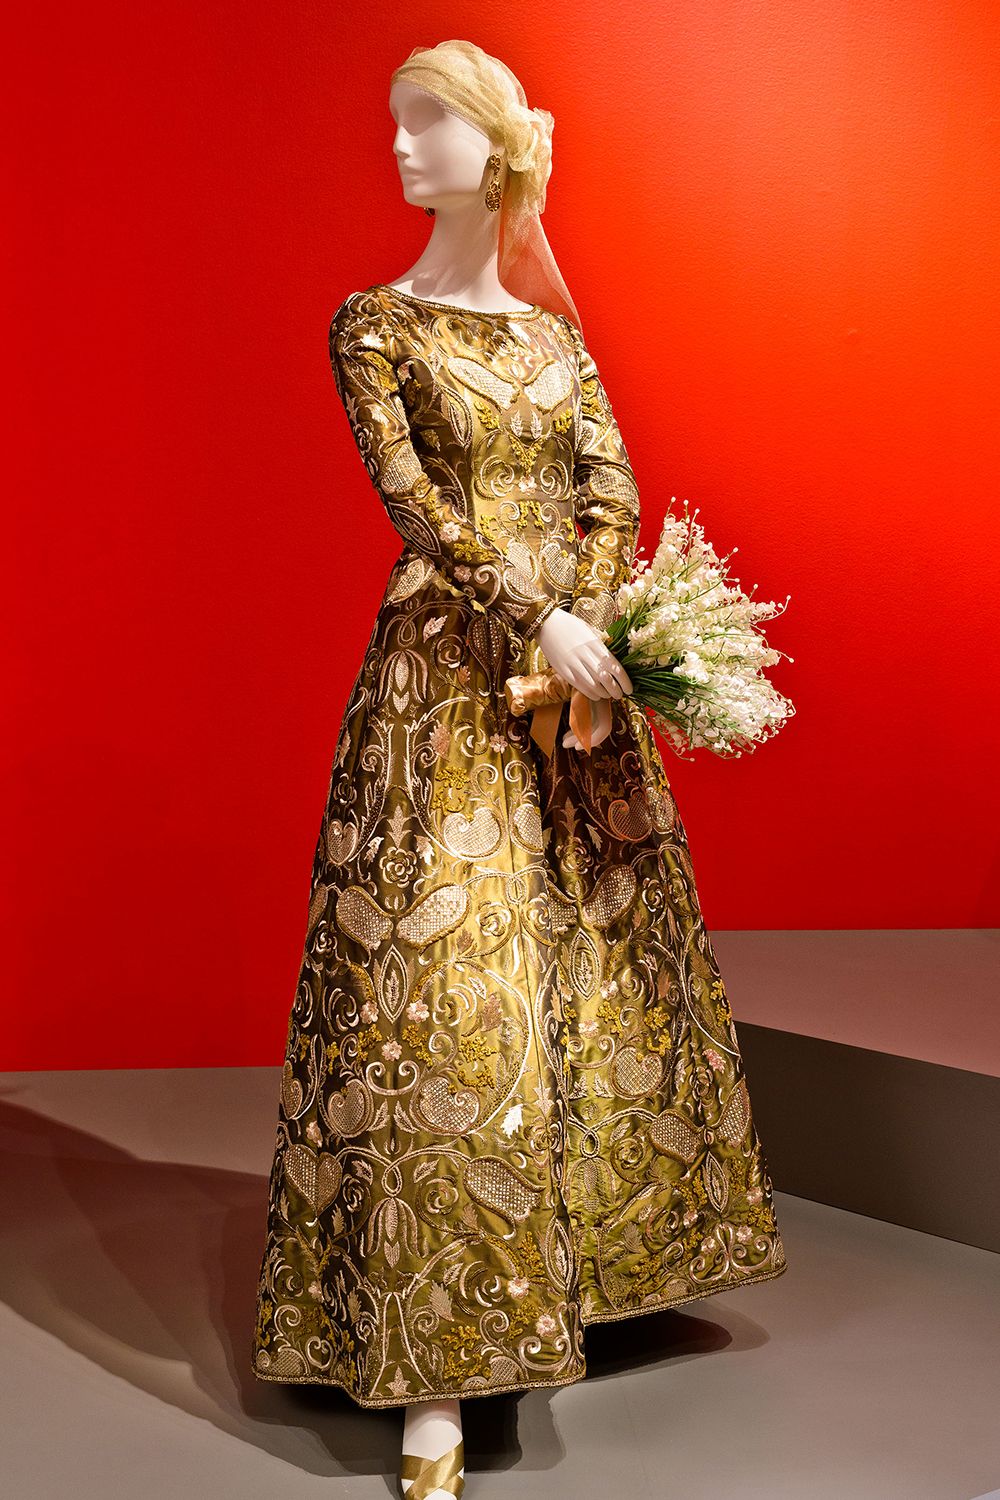 Oscar De La Fashion Exhibit Photos - The Glamour and Romance Oscar de la Renta